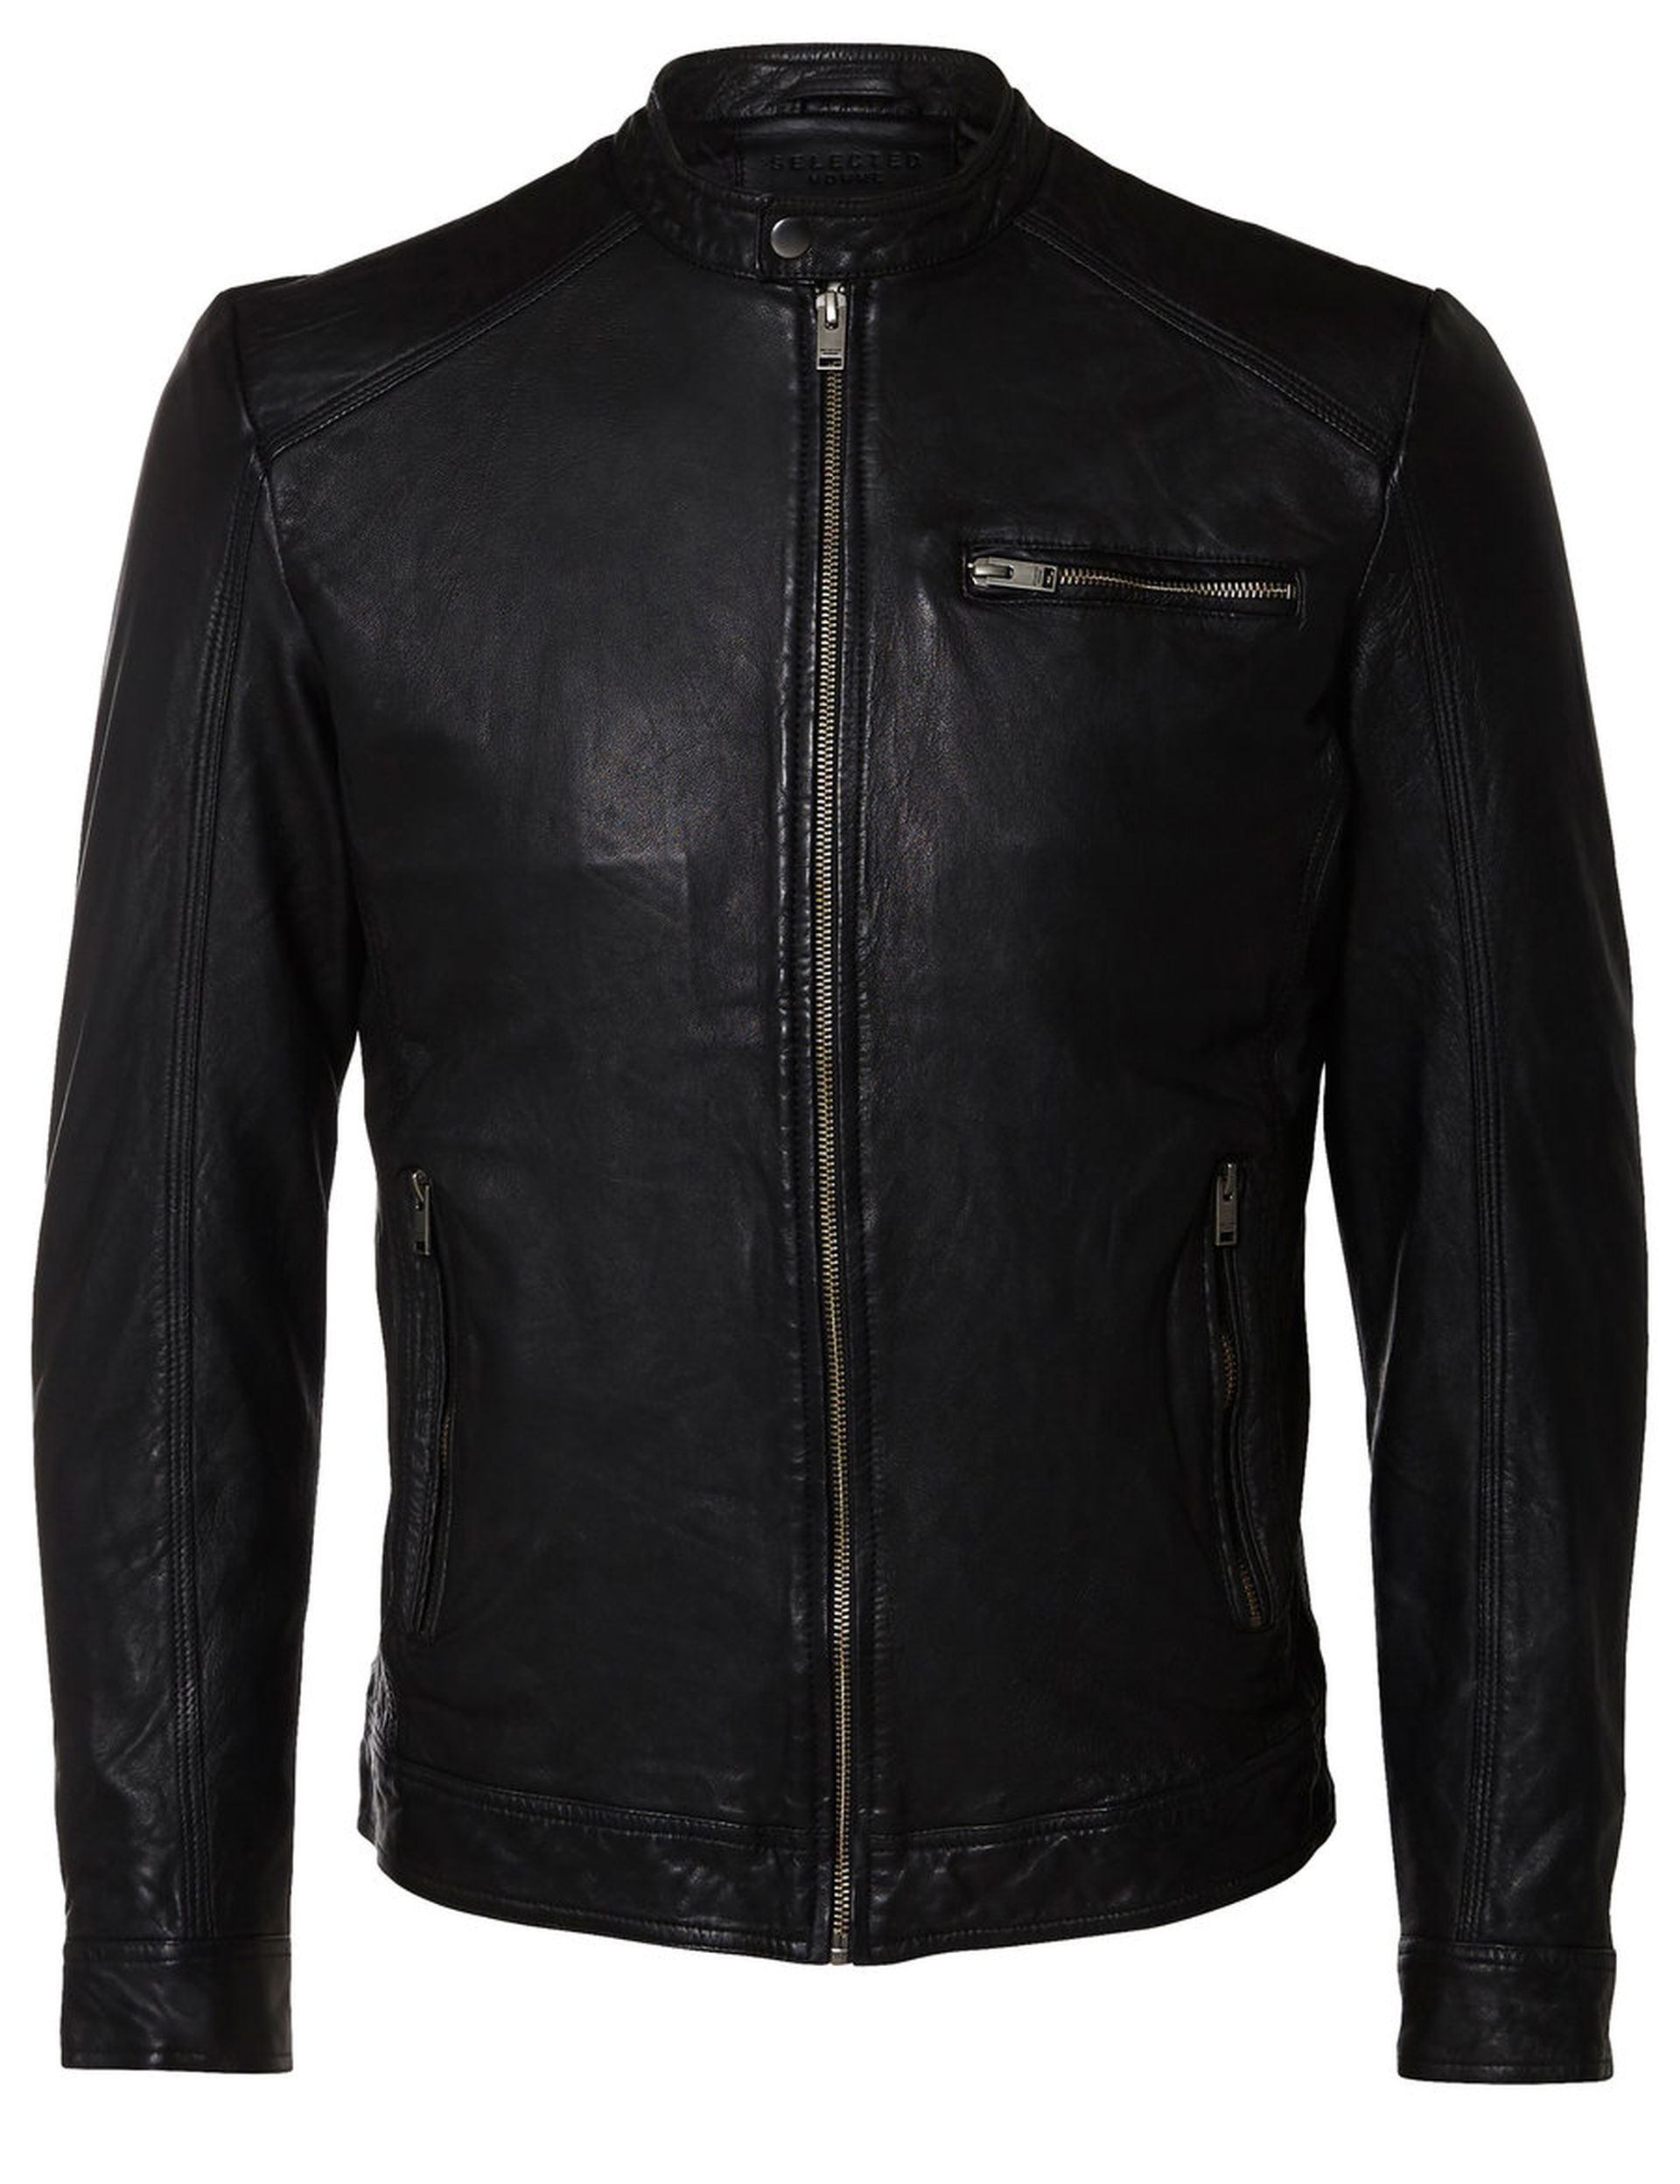 SELECTED Homme Tylor 100% Leather Jacket Short Fashion Bomber Biker ...